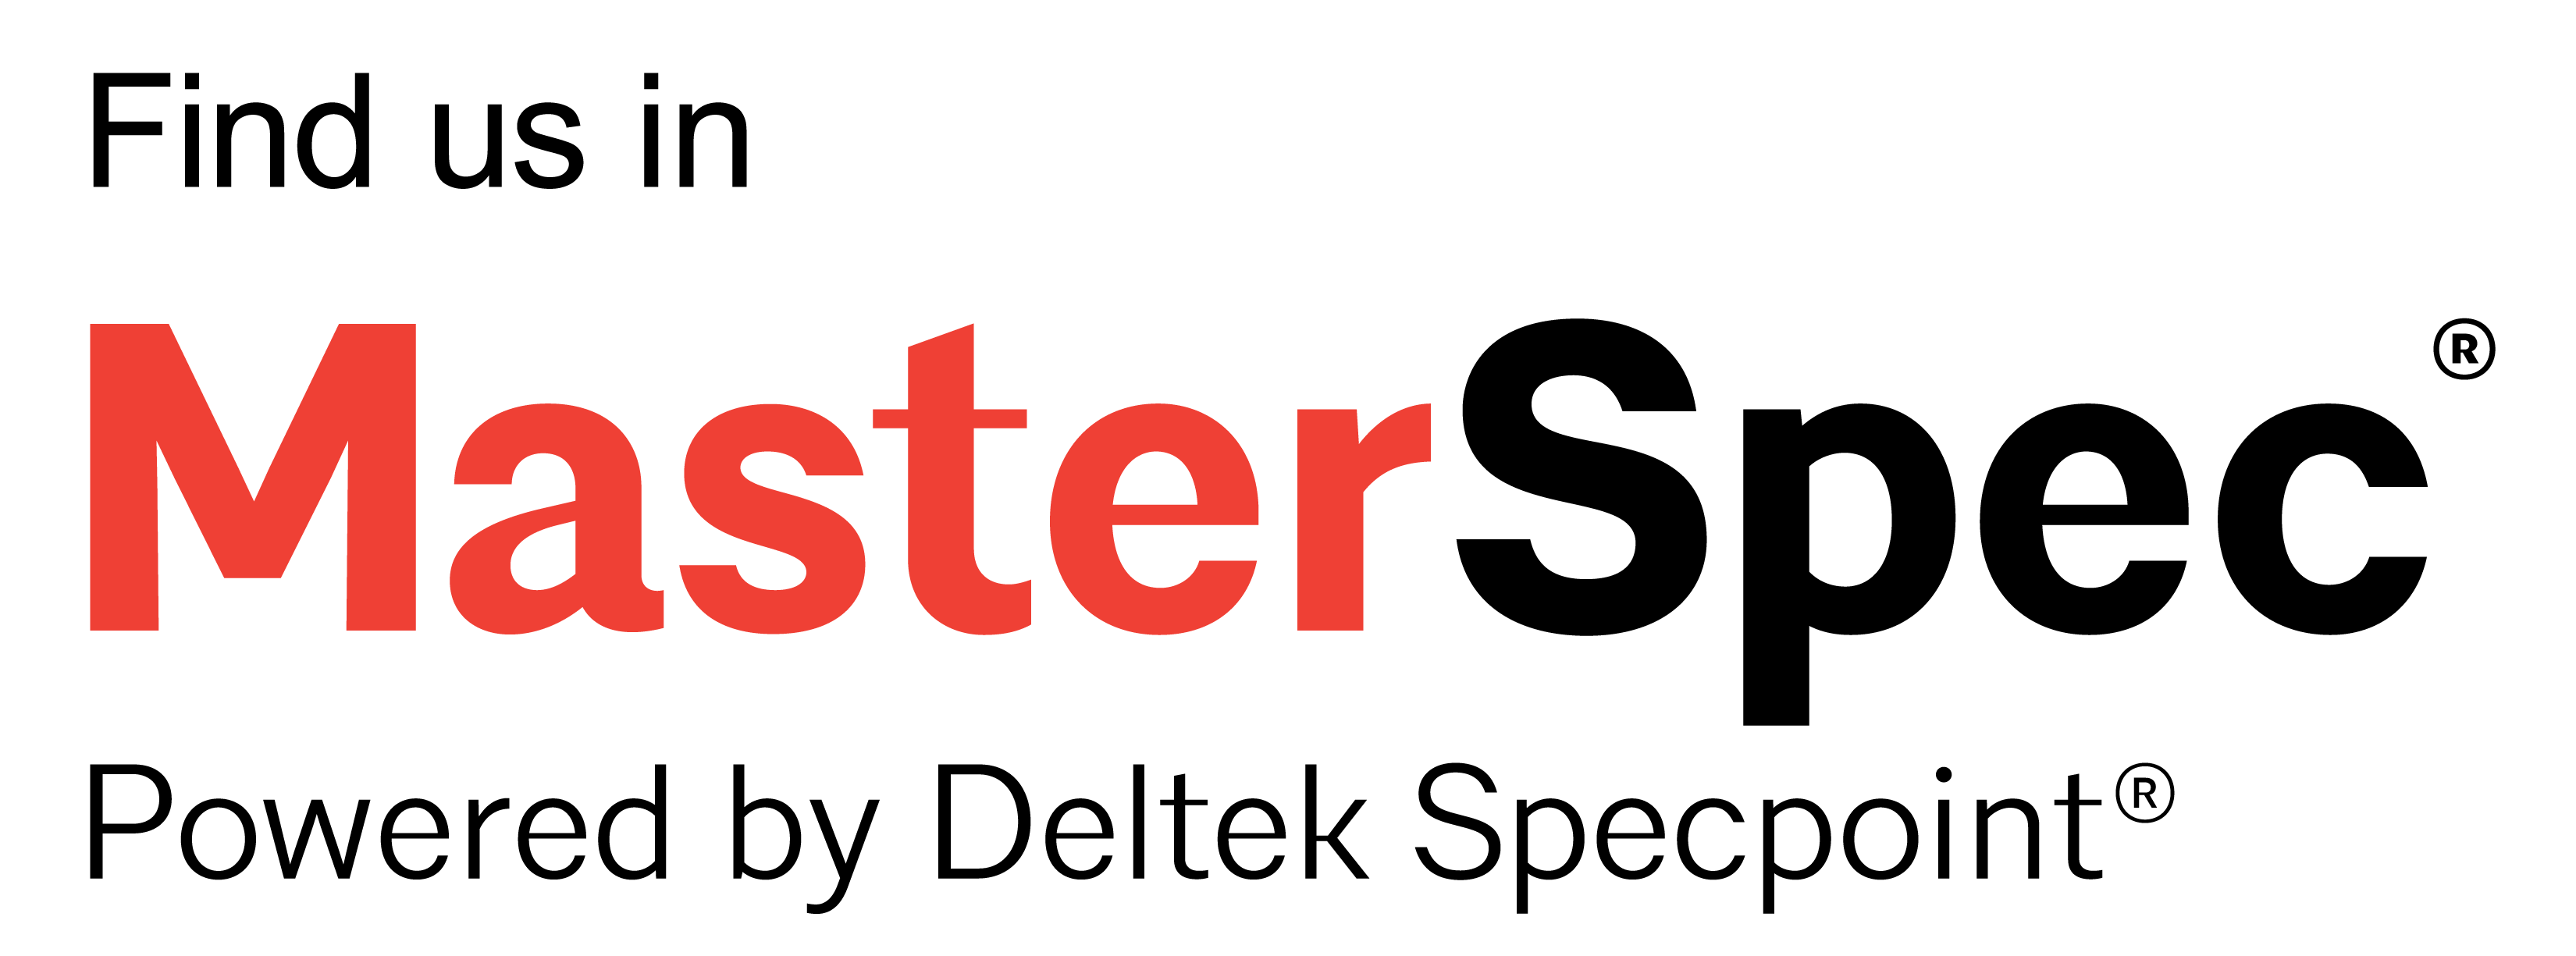 AIA FindUsIn MasterSpec Deltek Specpoint 2c full CMYK 01